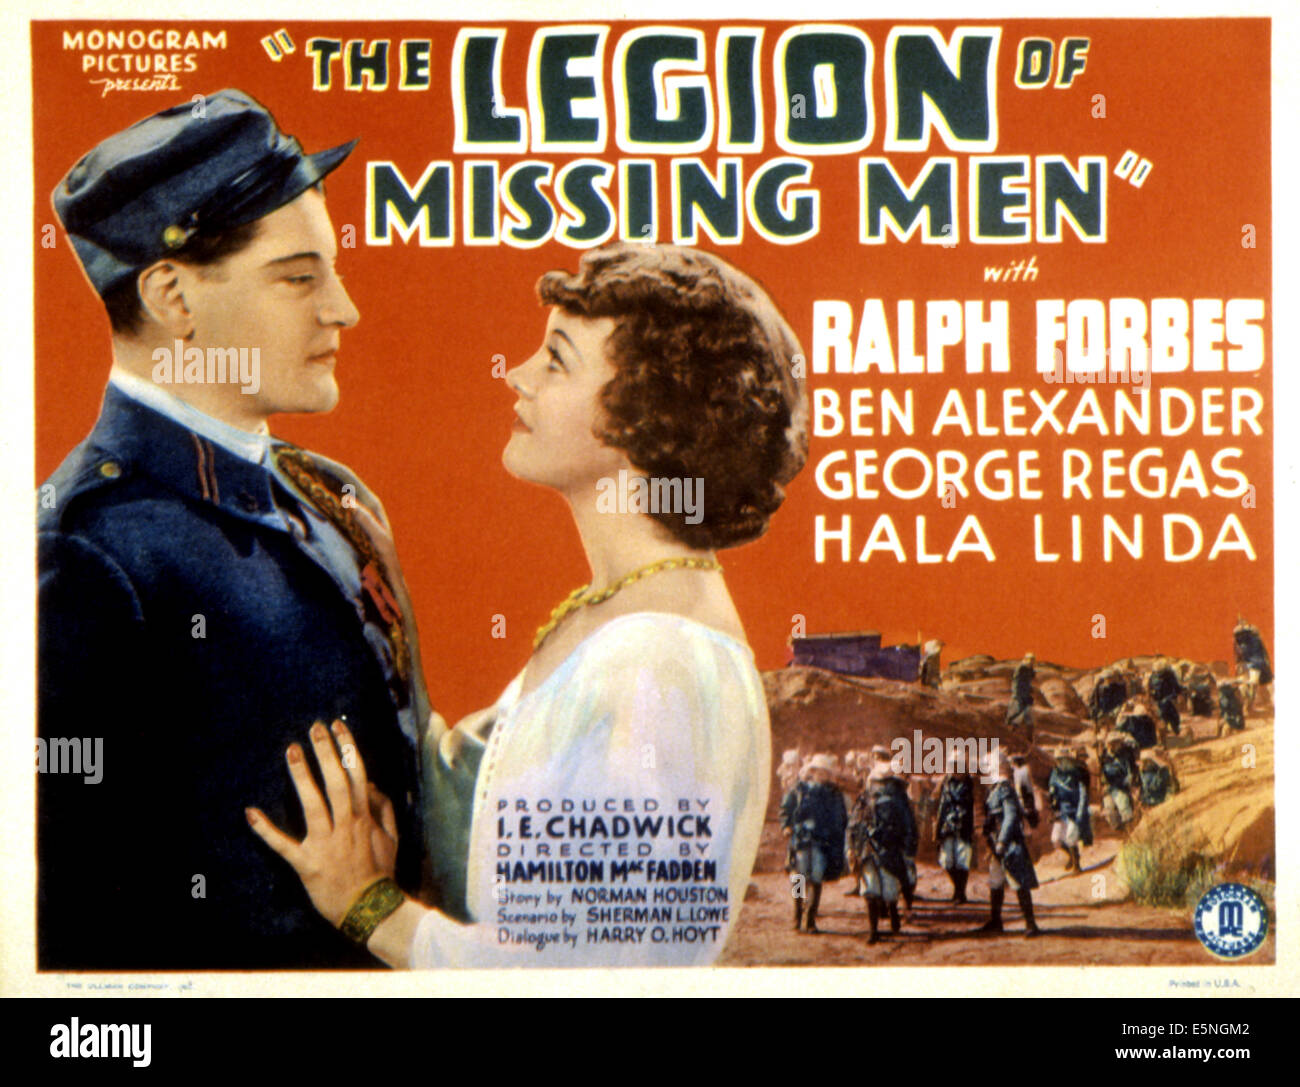 LEGION OF MISSING MEN, Ralph Forbes, Hala Linda, 1937 Stock Photo